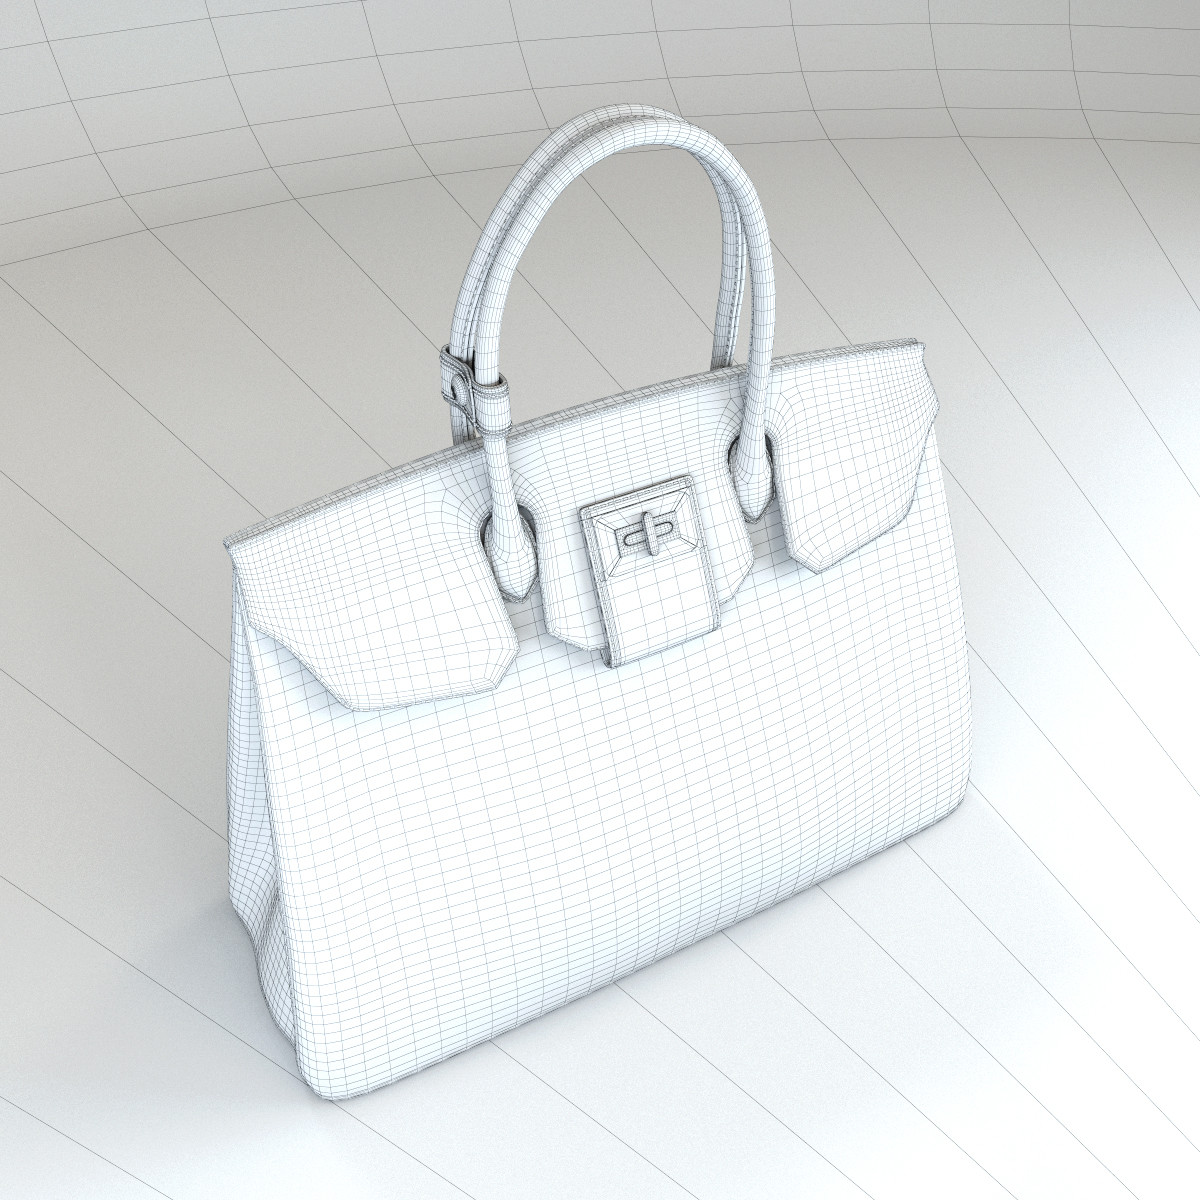 HERMES BIRKIN BAG bas relief 3D model 3D printable